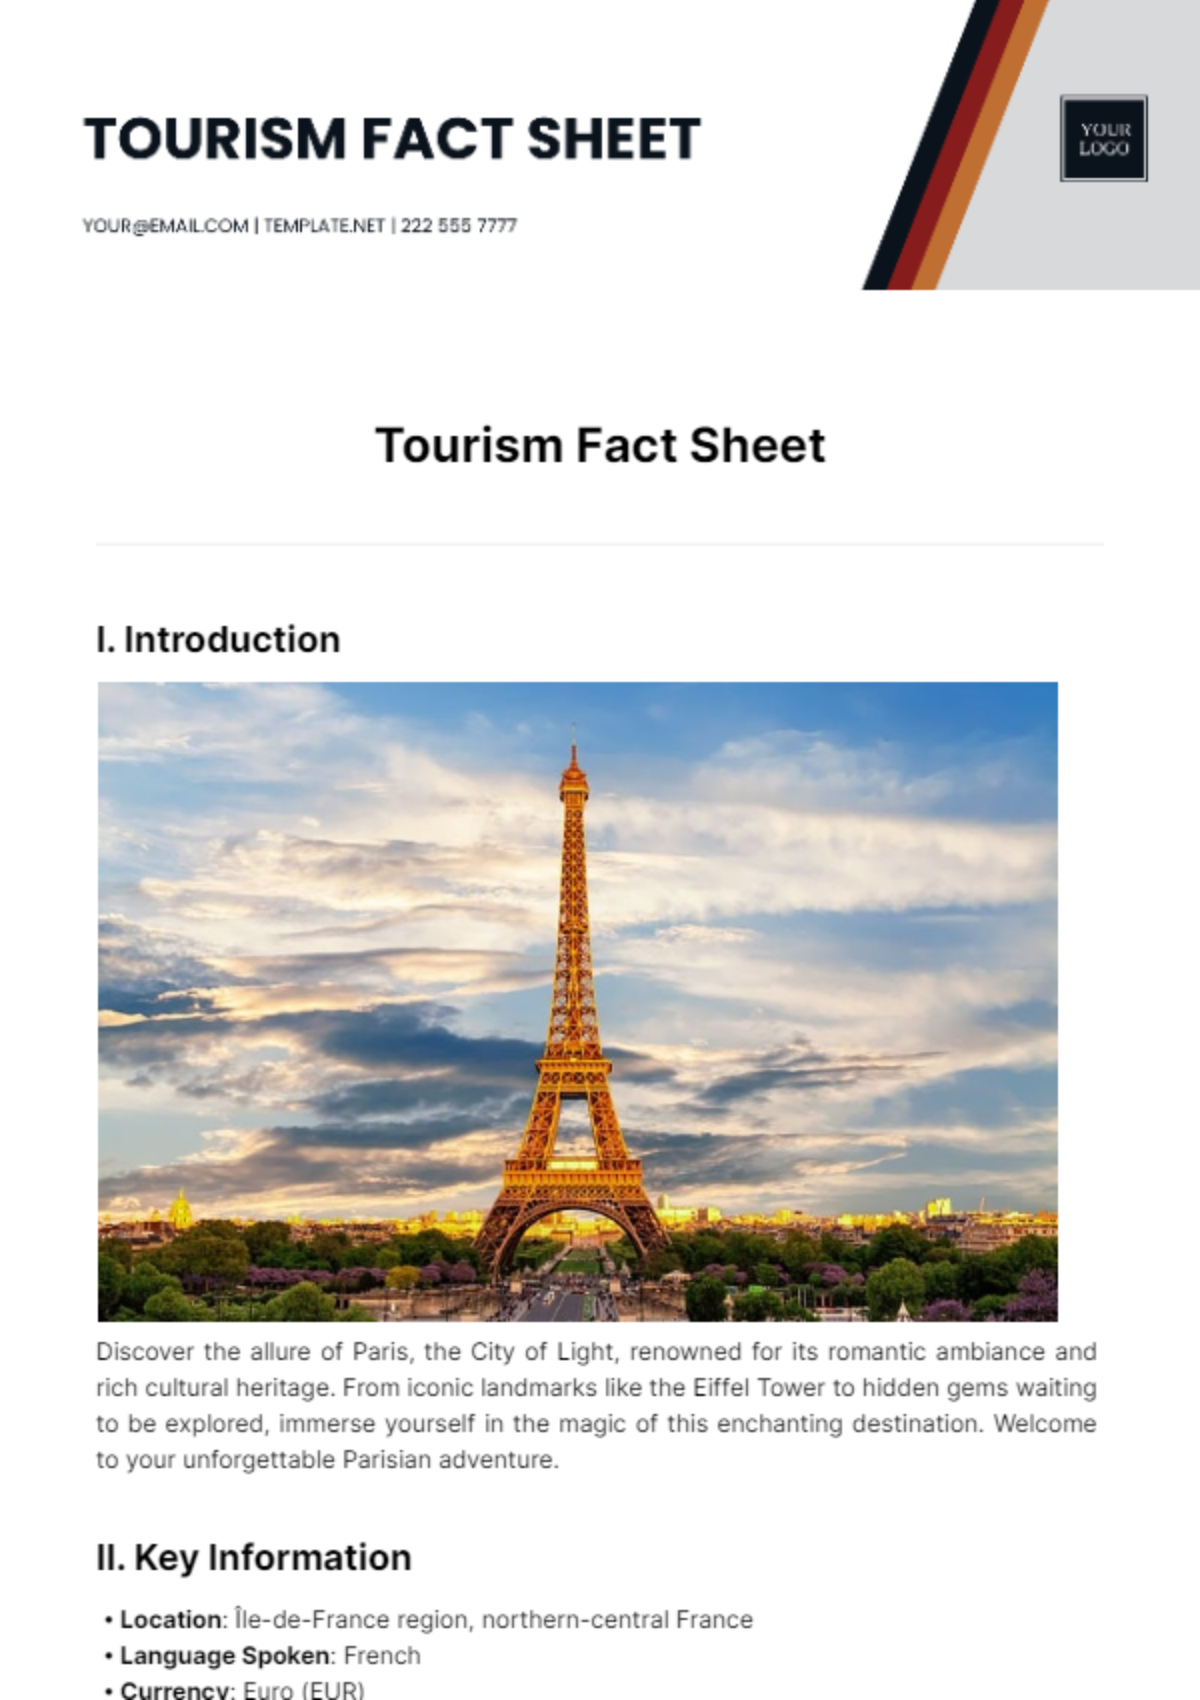 Tourism Fact Sheet Template